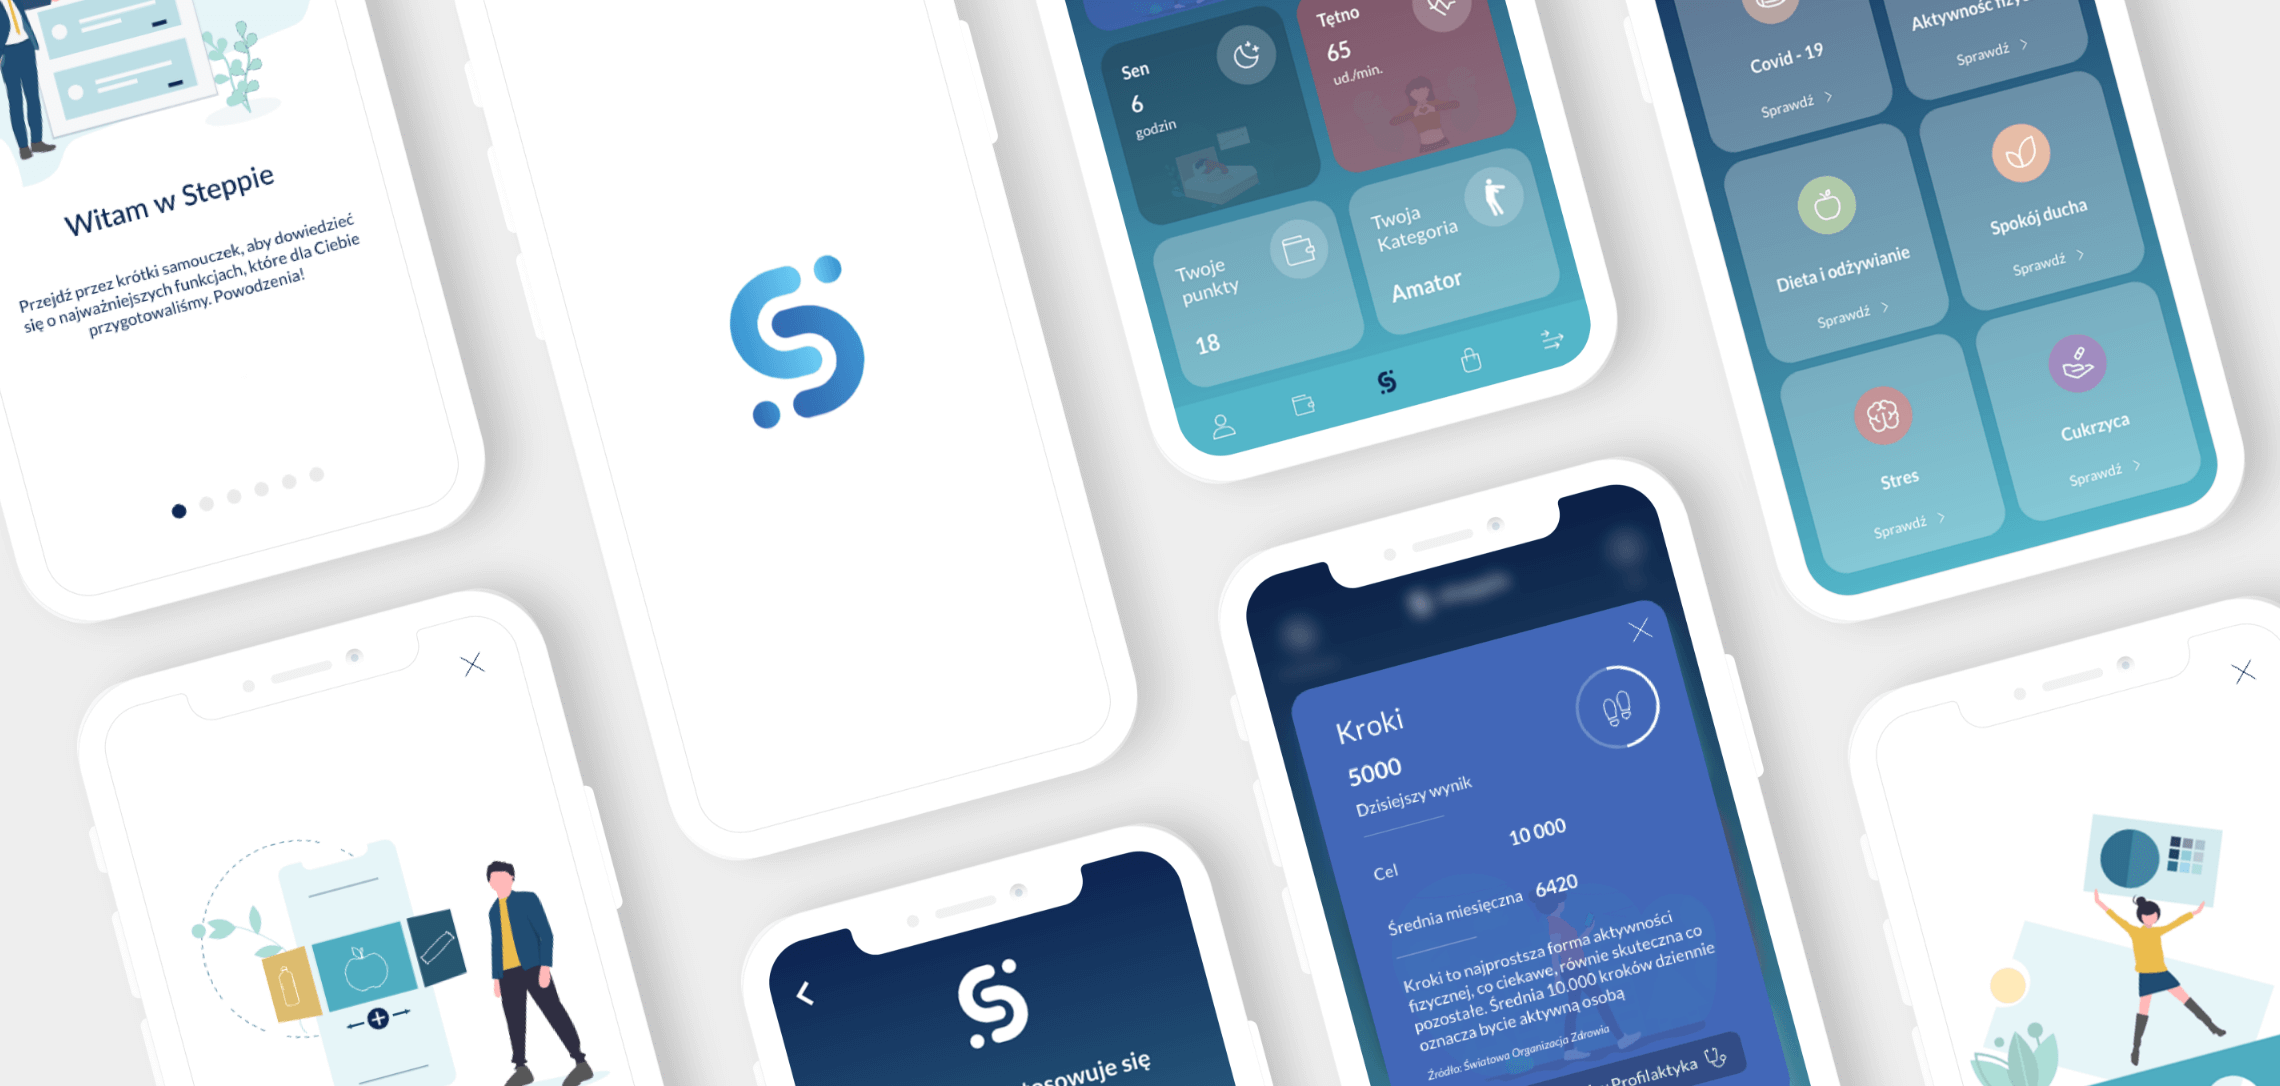 steppie mobile app case study